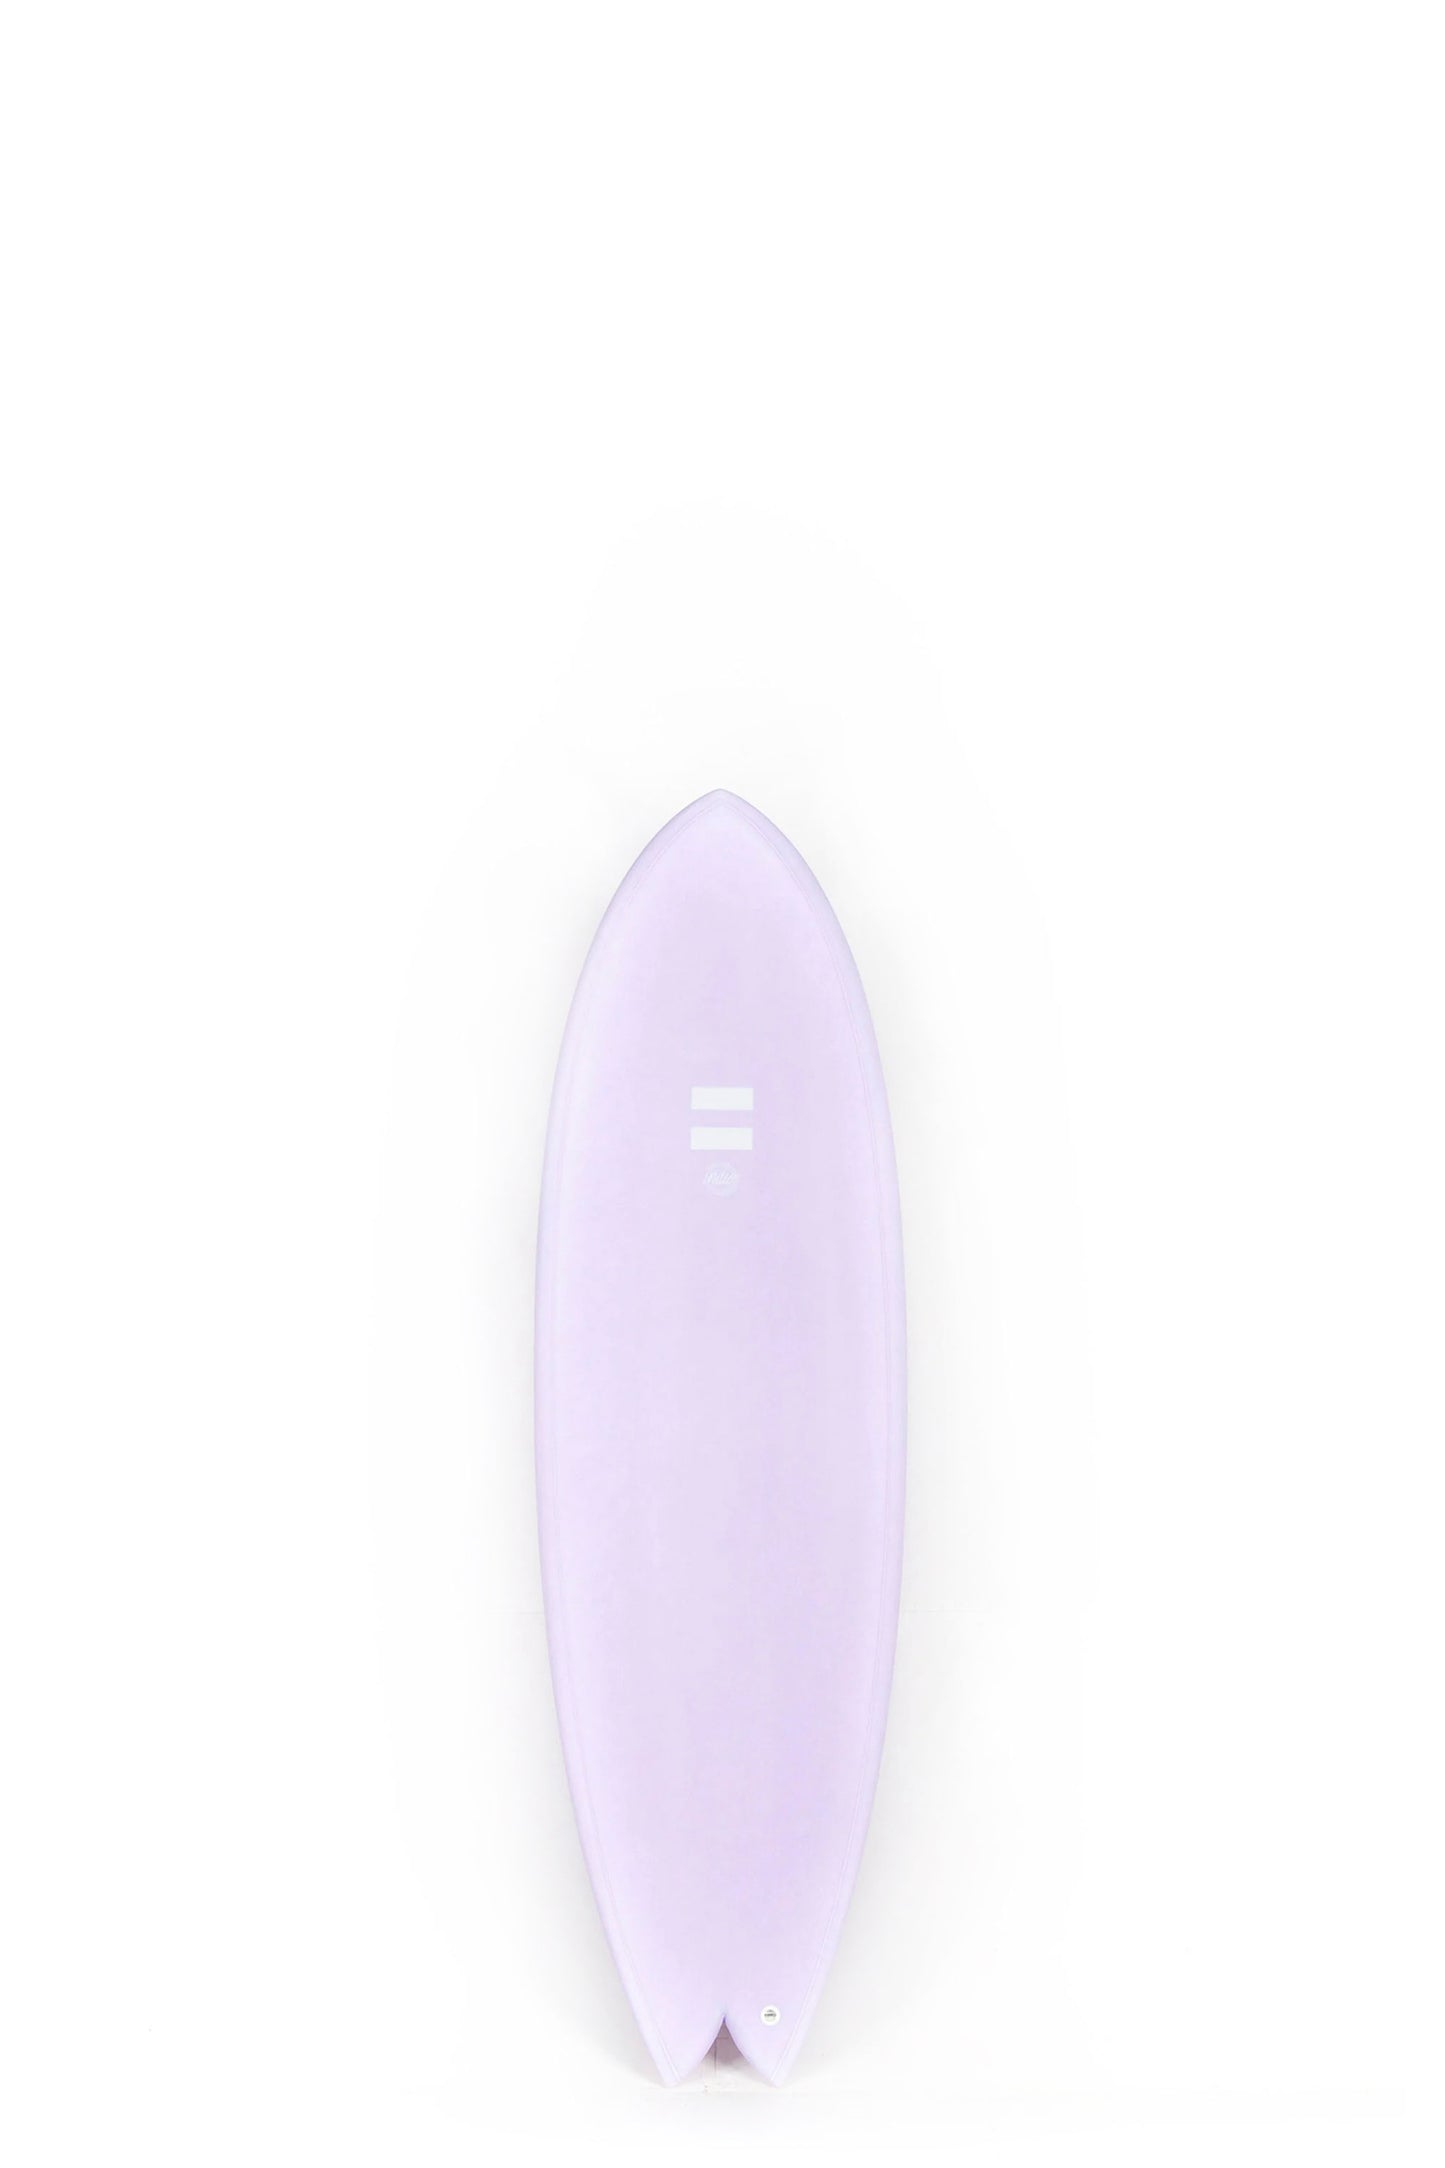 
                  
                    Indio Surfboards - COMBO Purple - 5'7" x 20 1/4 x 2 3/8 x 31,70L
                  
                